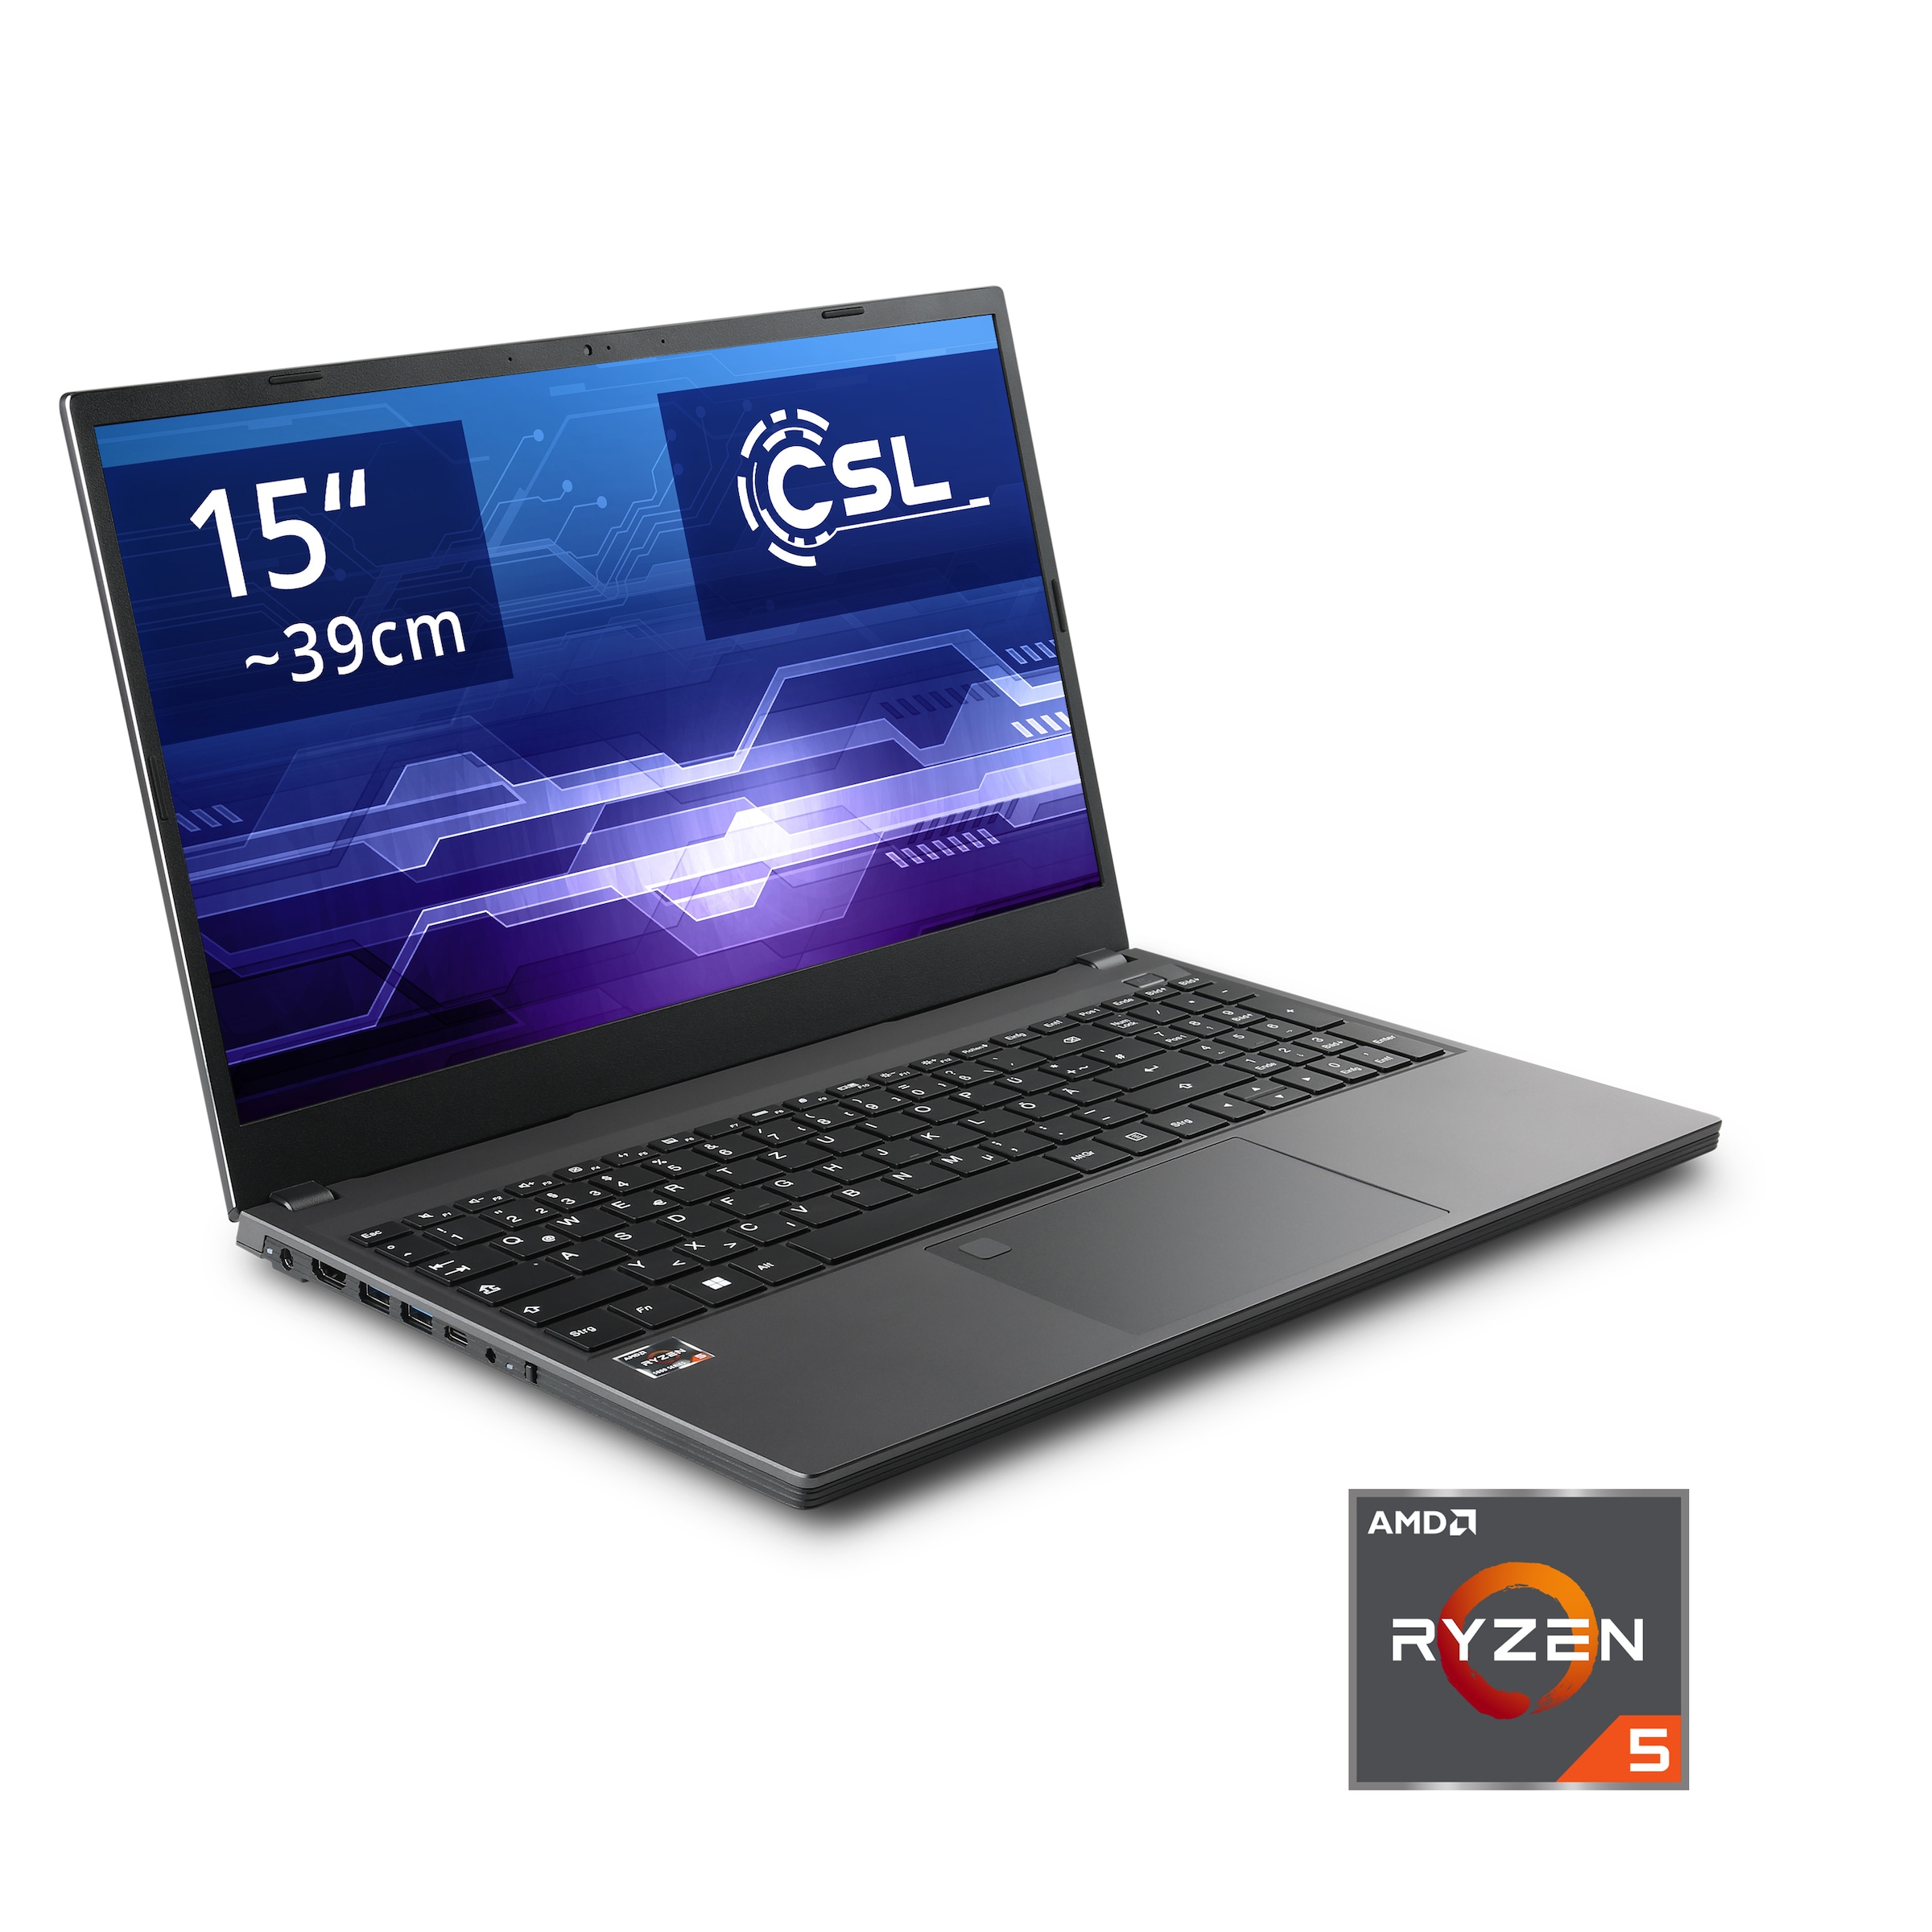 CSL Notebook »R'Evolve C15 5500U/64GB/4000GB/Windows 11 Home«, 39,6 cm, / 15,6 Zoll, 4000 GB SSD